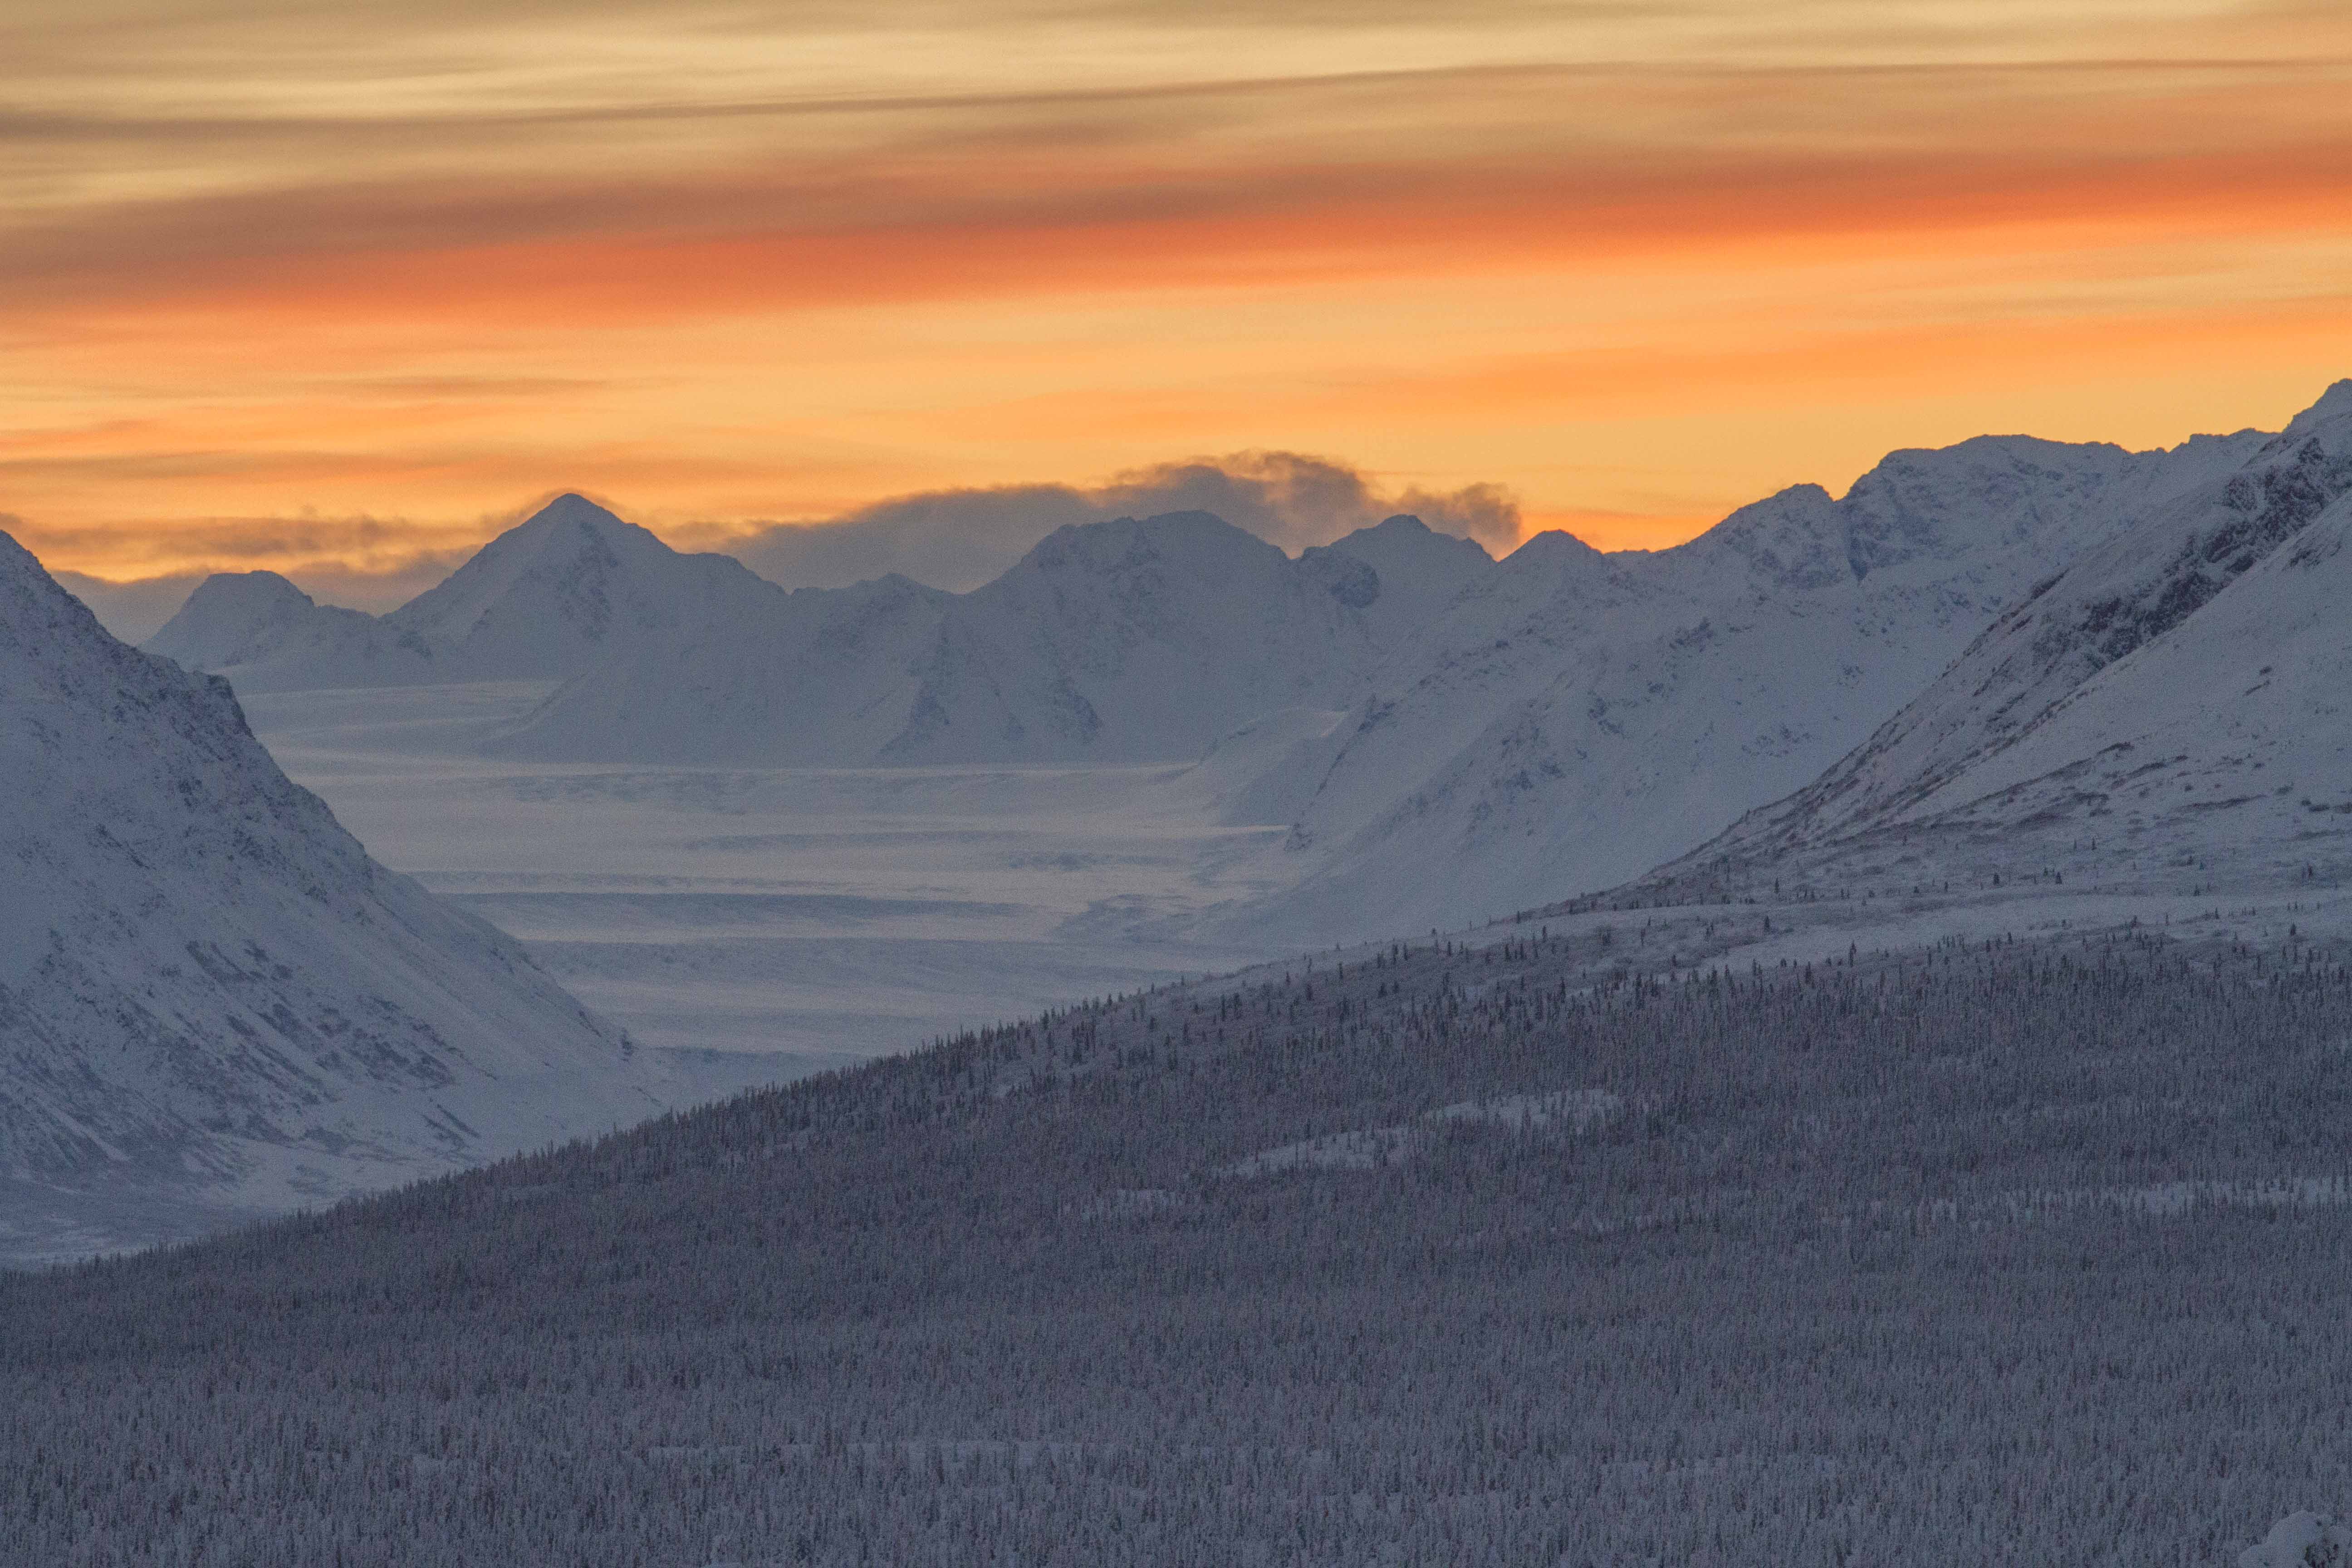 Sunrise over an Alaskan valley